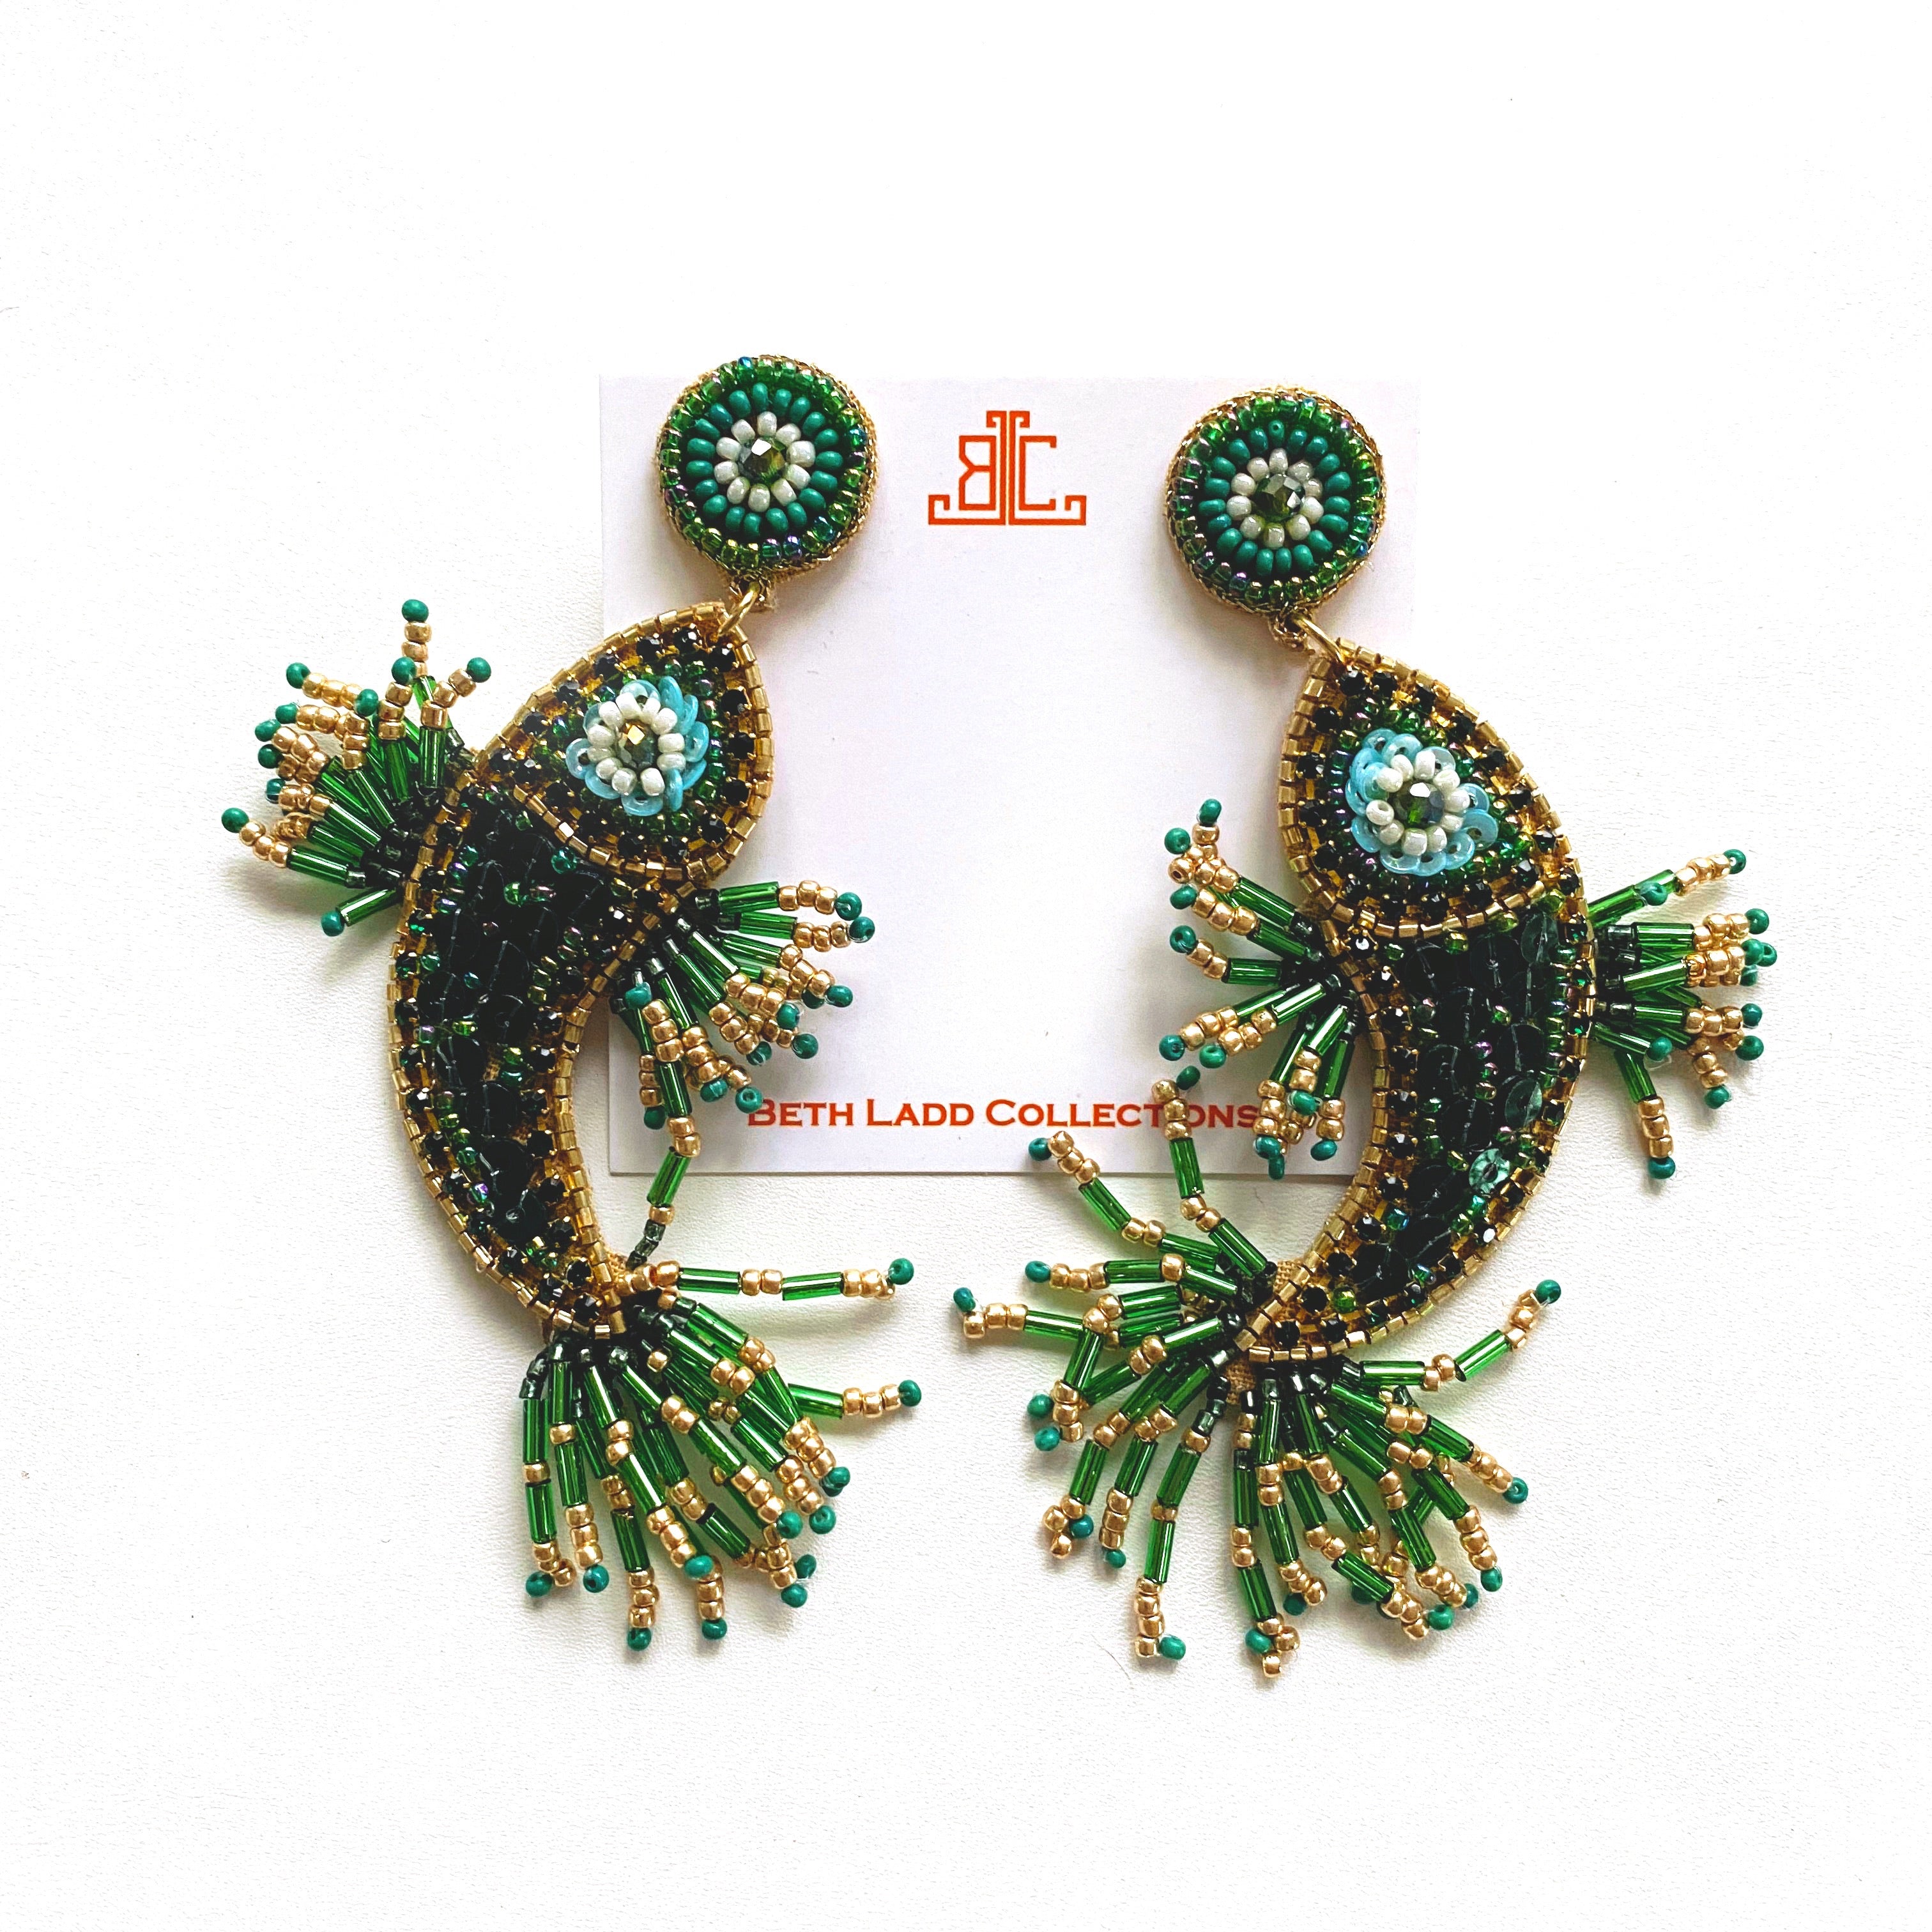 Handmade Asian Fish Earrings in Green